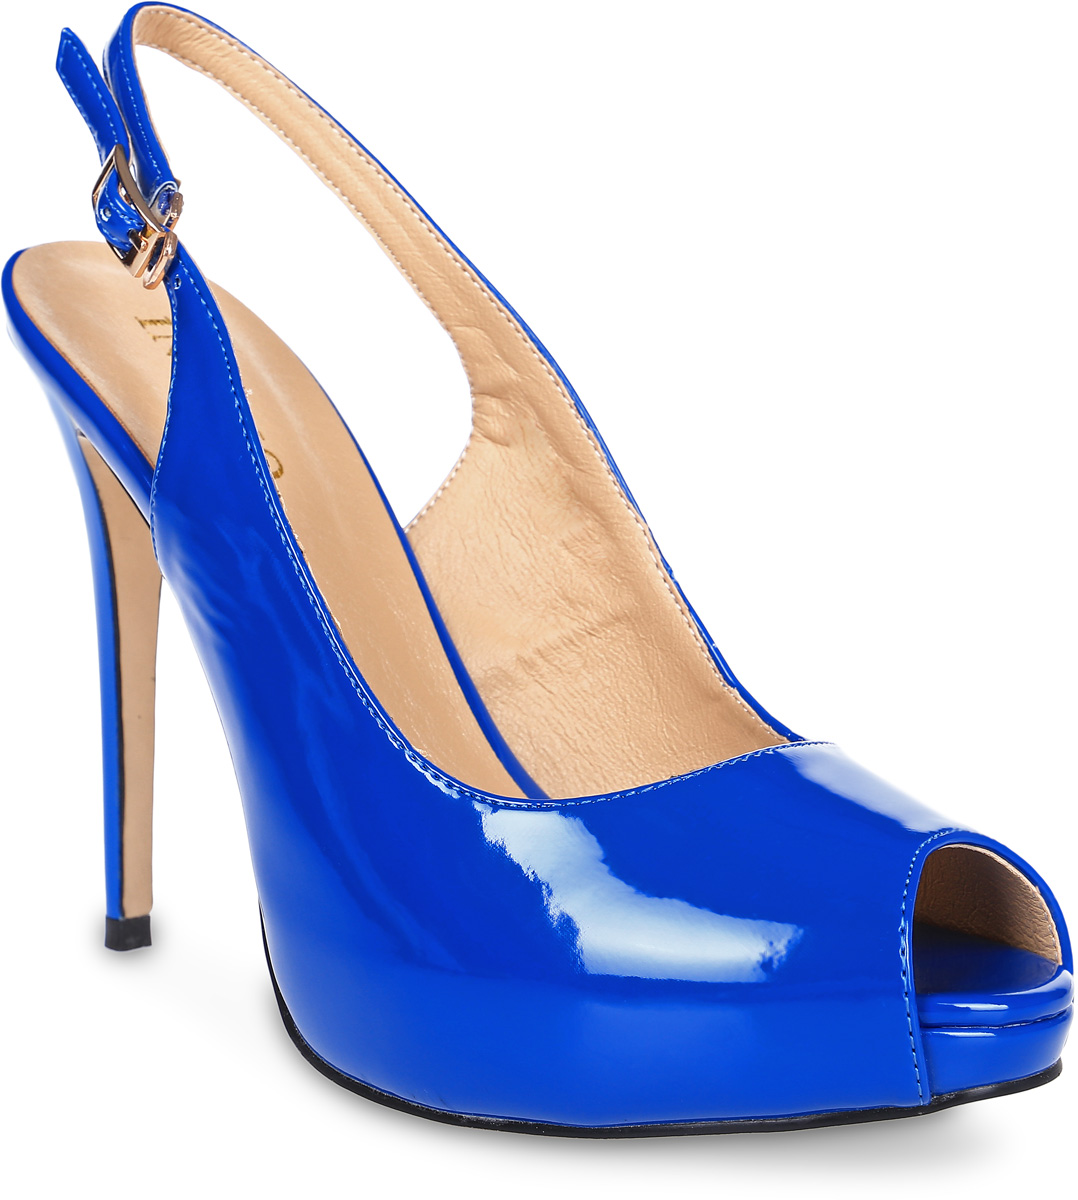 Туфли женские Inario, цвет: синий. 17164-01-8. Размер 36